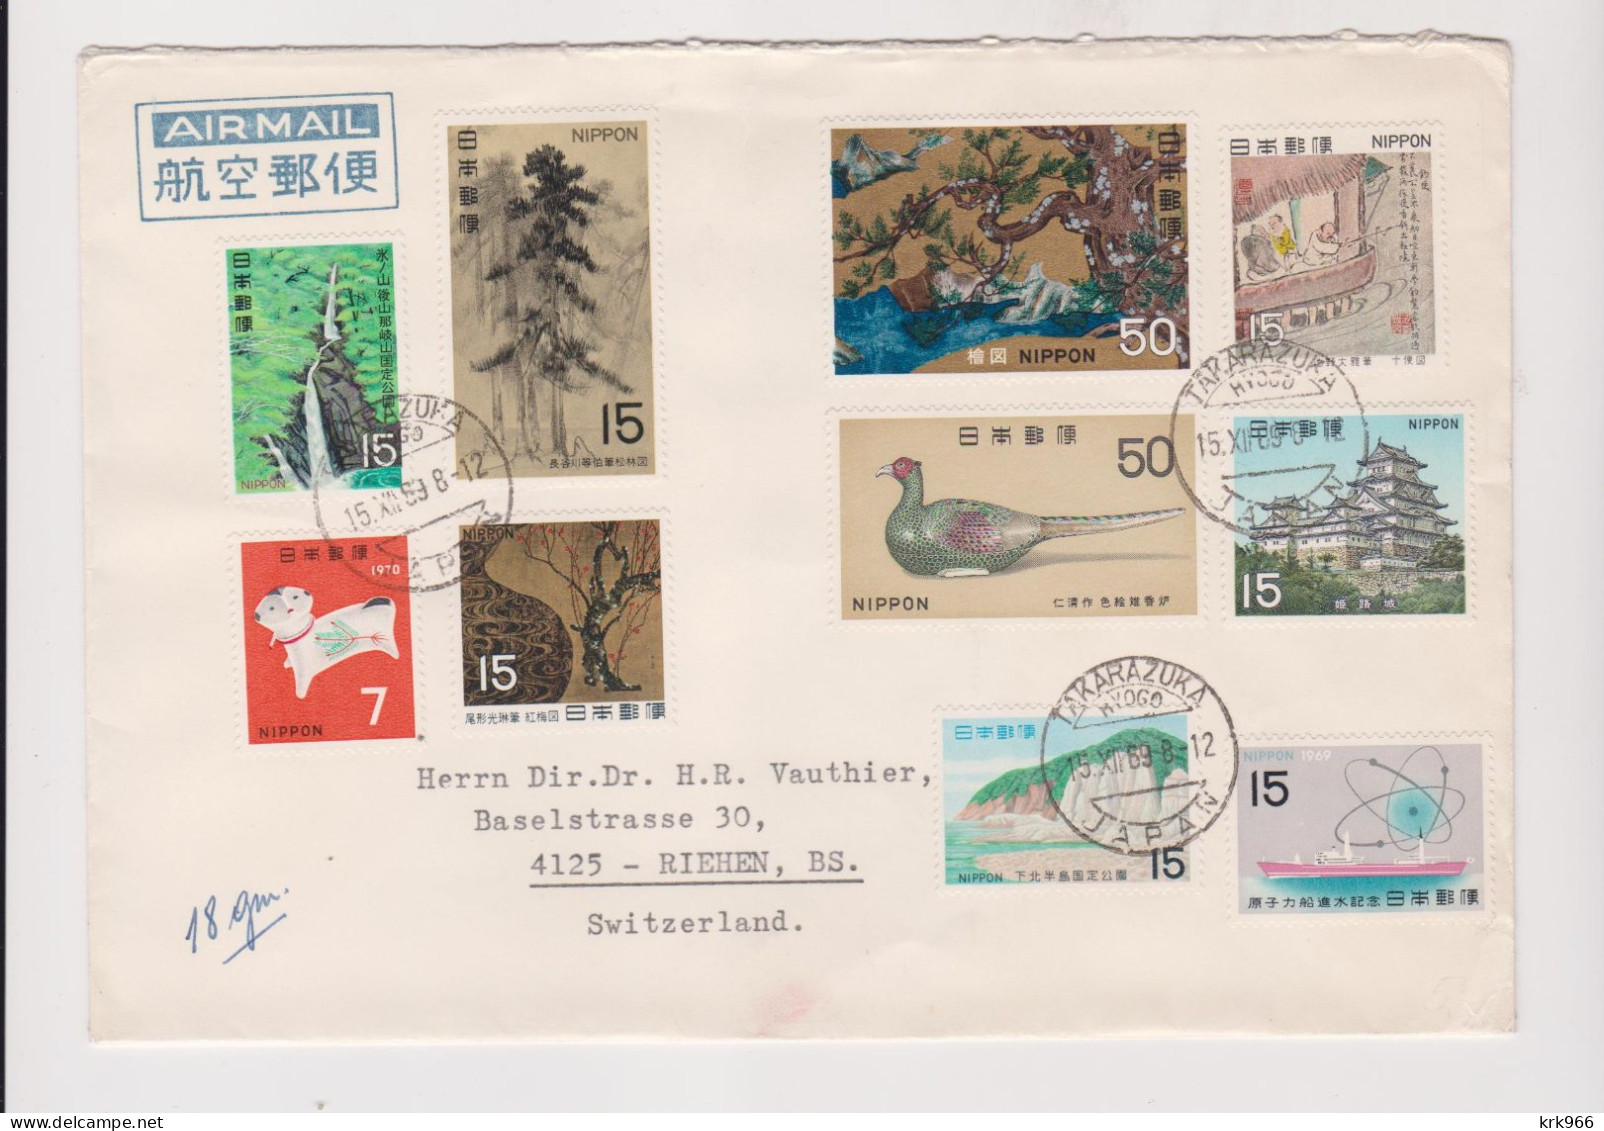 JAPAN 1969 TAKARAZUKA Nice Airmail Cover To Swityerland - Covers & Documents